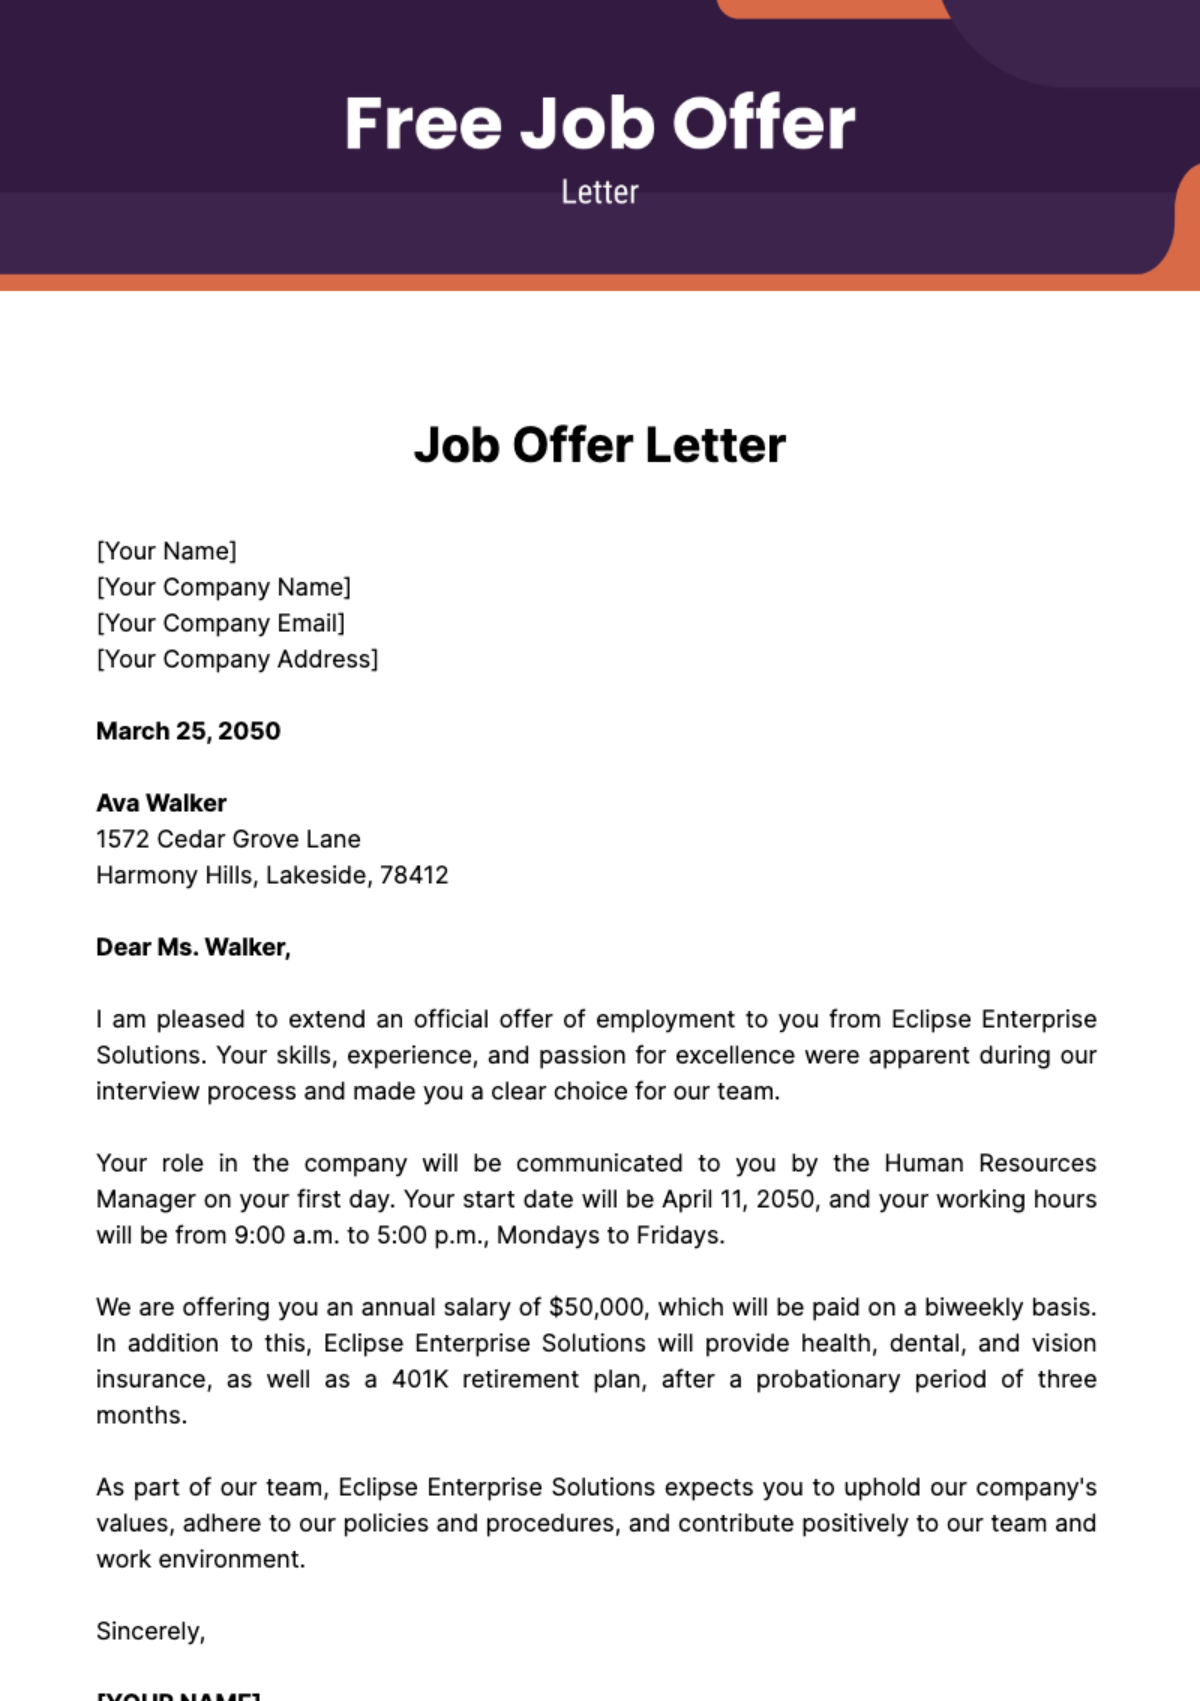 Free Job Offer Letter Template